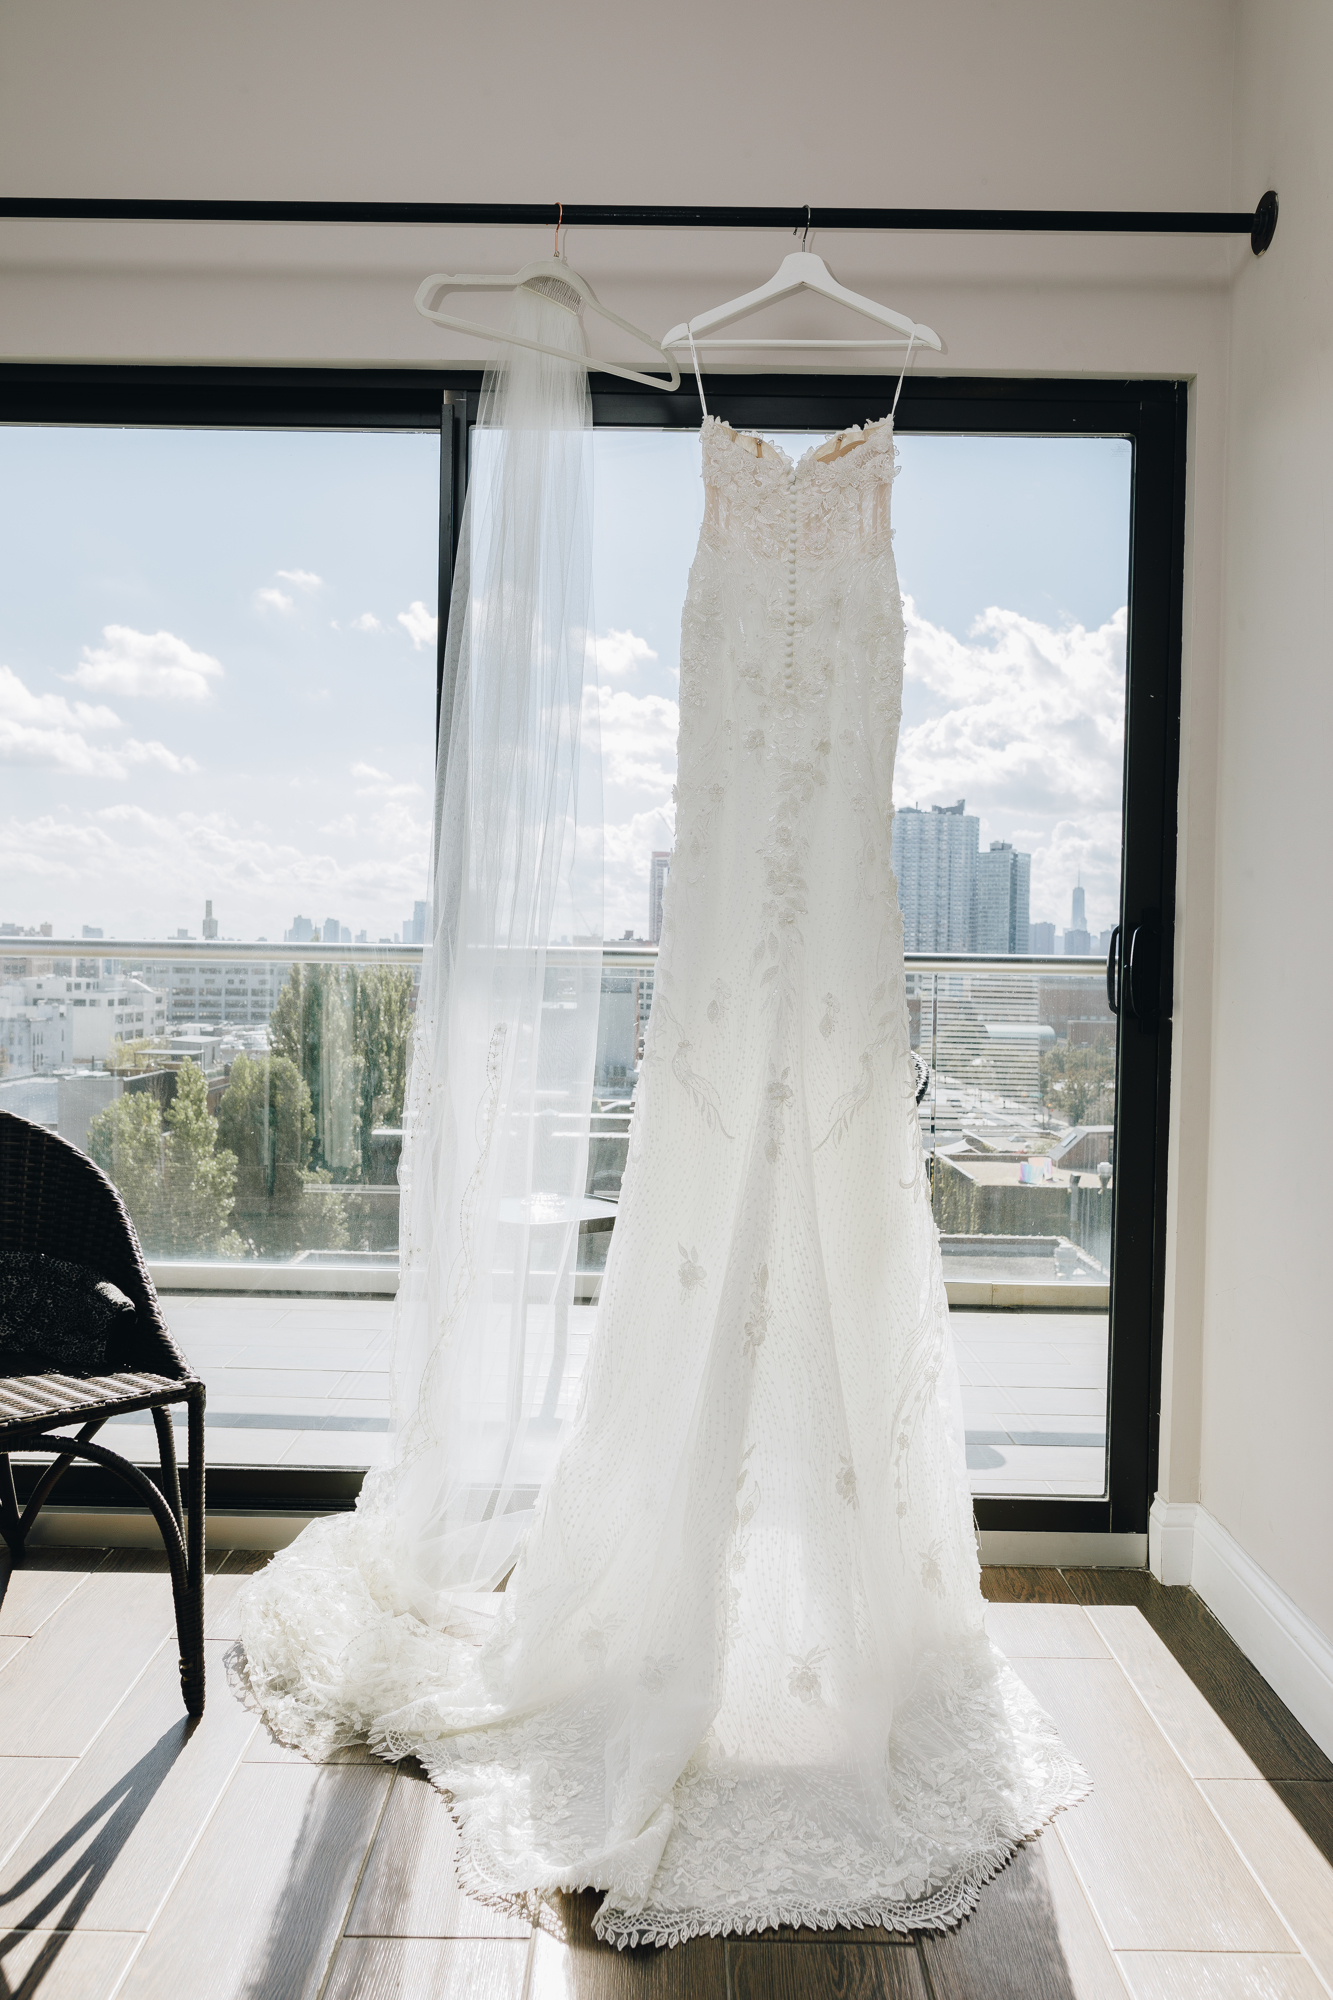 Ravel Hotel wedding dress in bridal suite